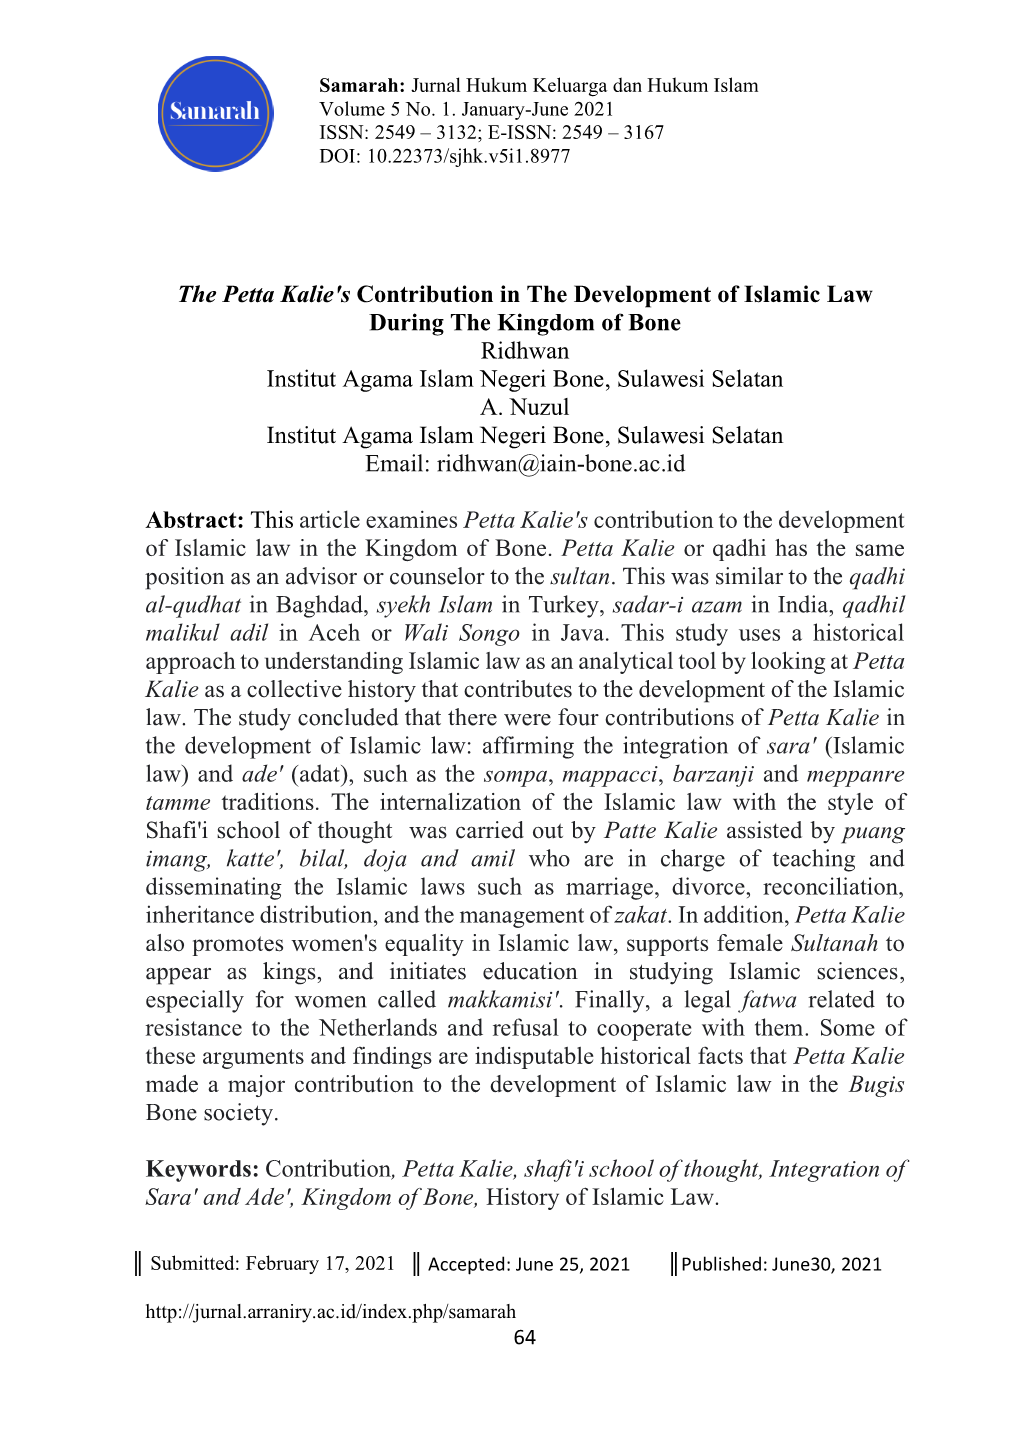 The Petta Kalie's Contribution in the Development of Islamic Law During the Kingdom of Bone Ridhwan Institut Agama Islam Negeri Bone, Sulawesi Selatan A